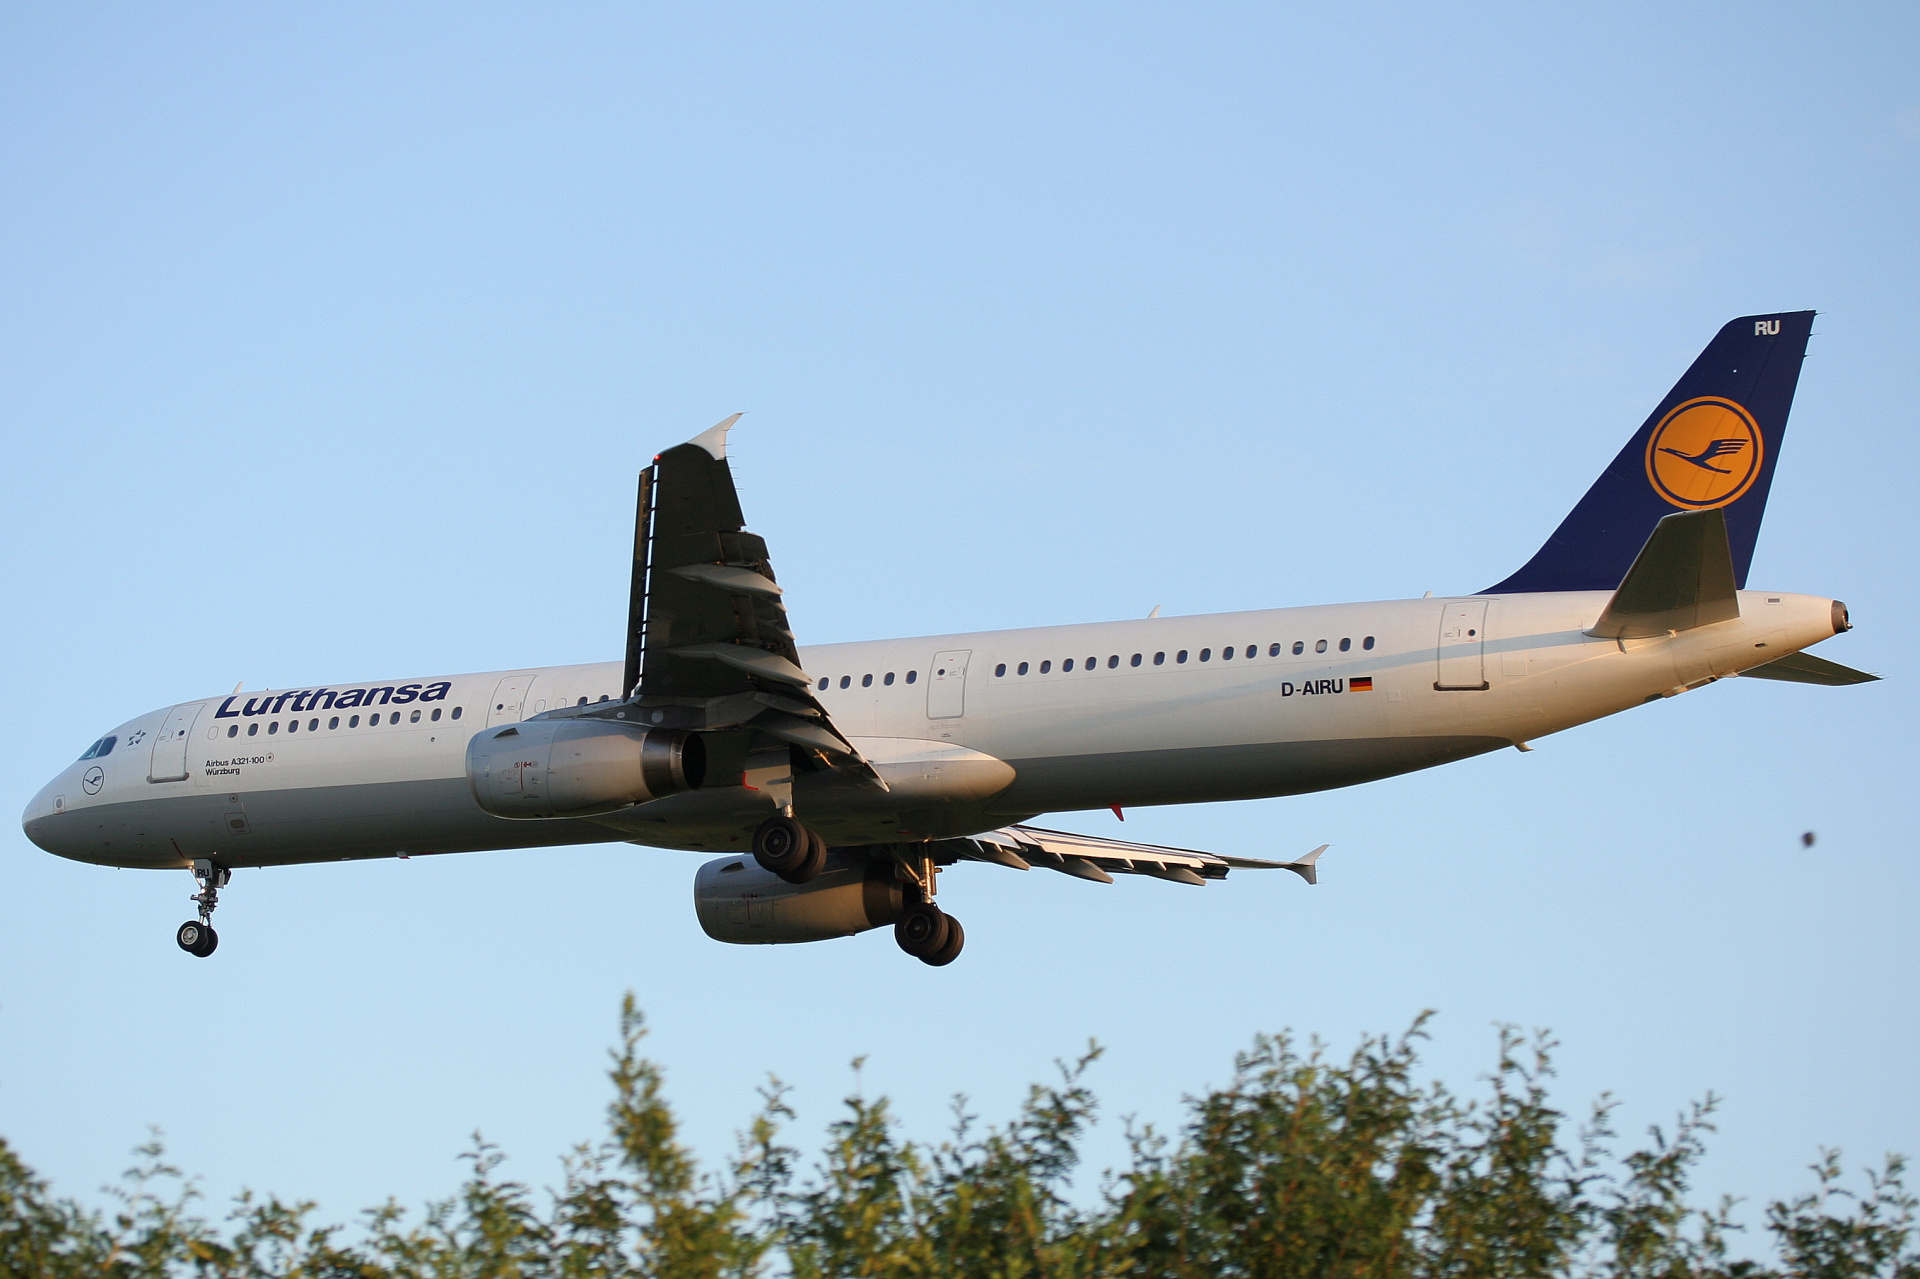 D-AIRU (Aircraft » EPWA Spotting » Airbus A321-100 » Lufthansa)